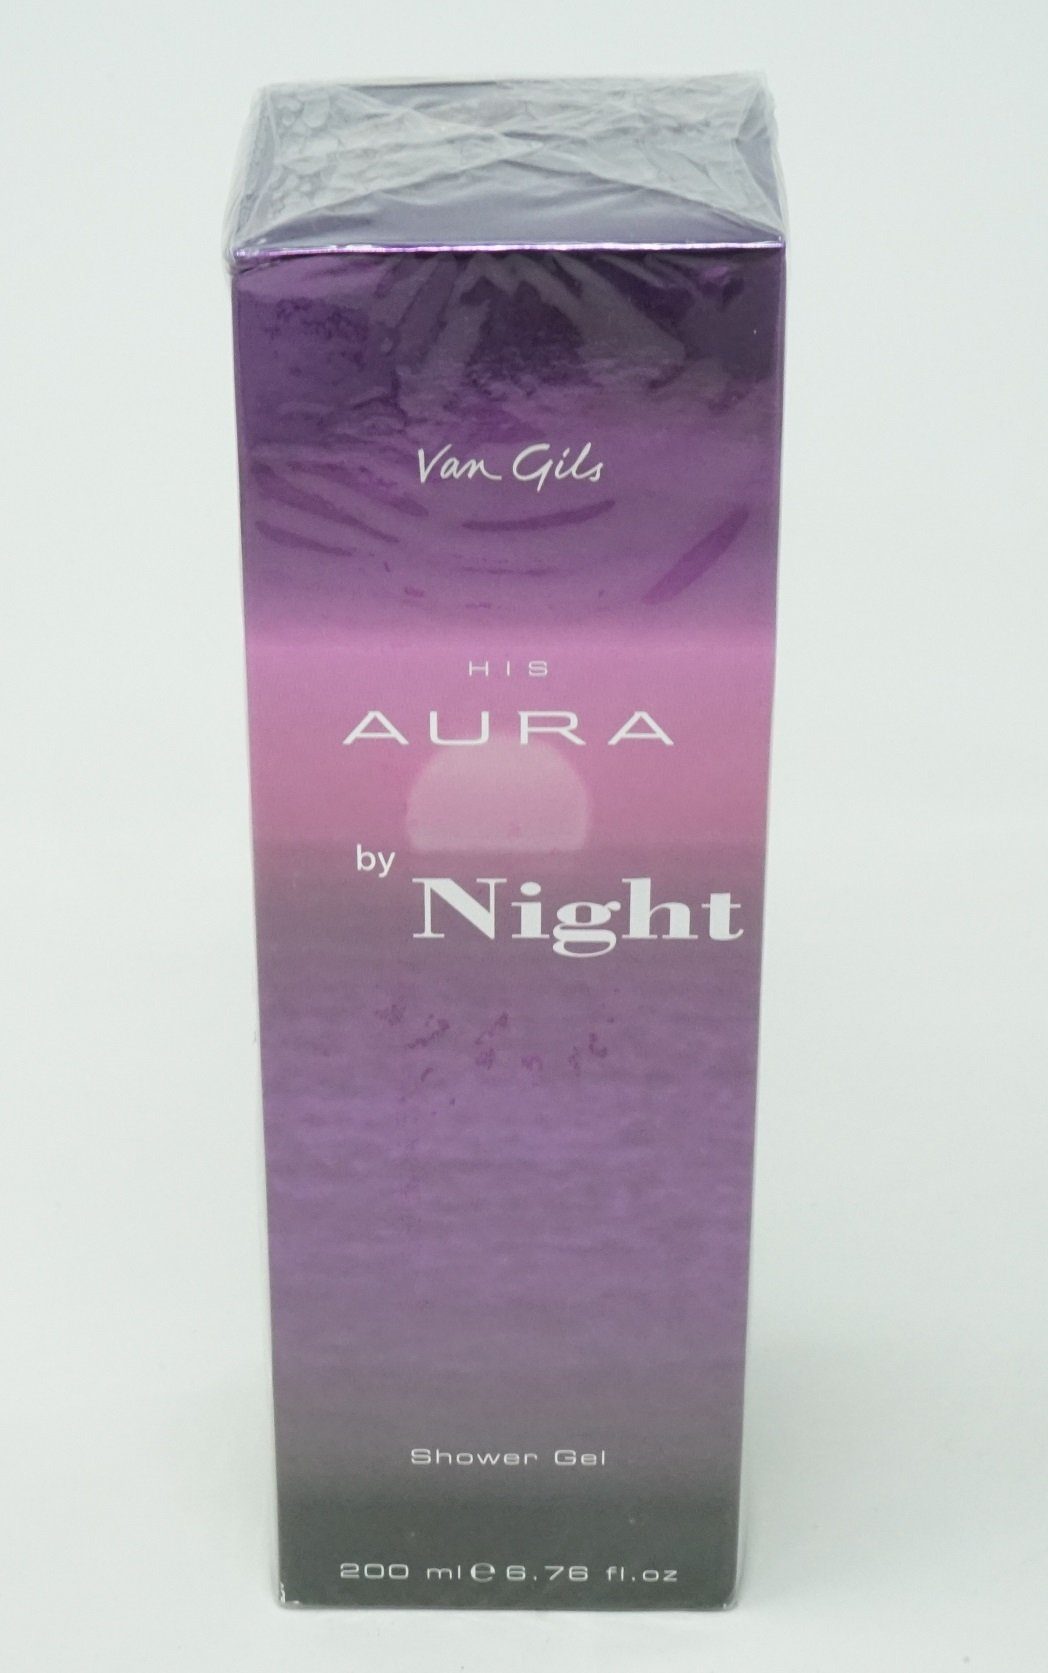 Van Gils Duschgel Van Gils Aura by Night Shower Gel 200 ml